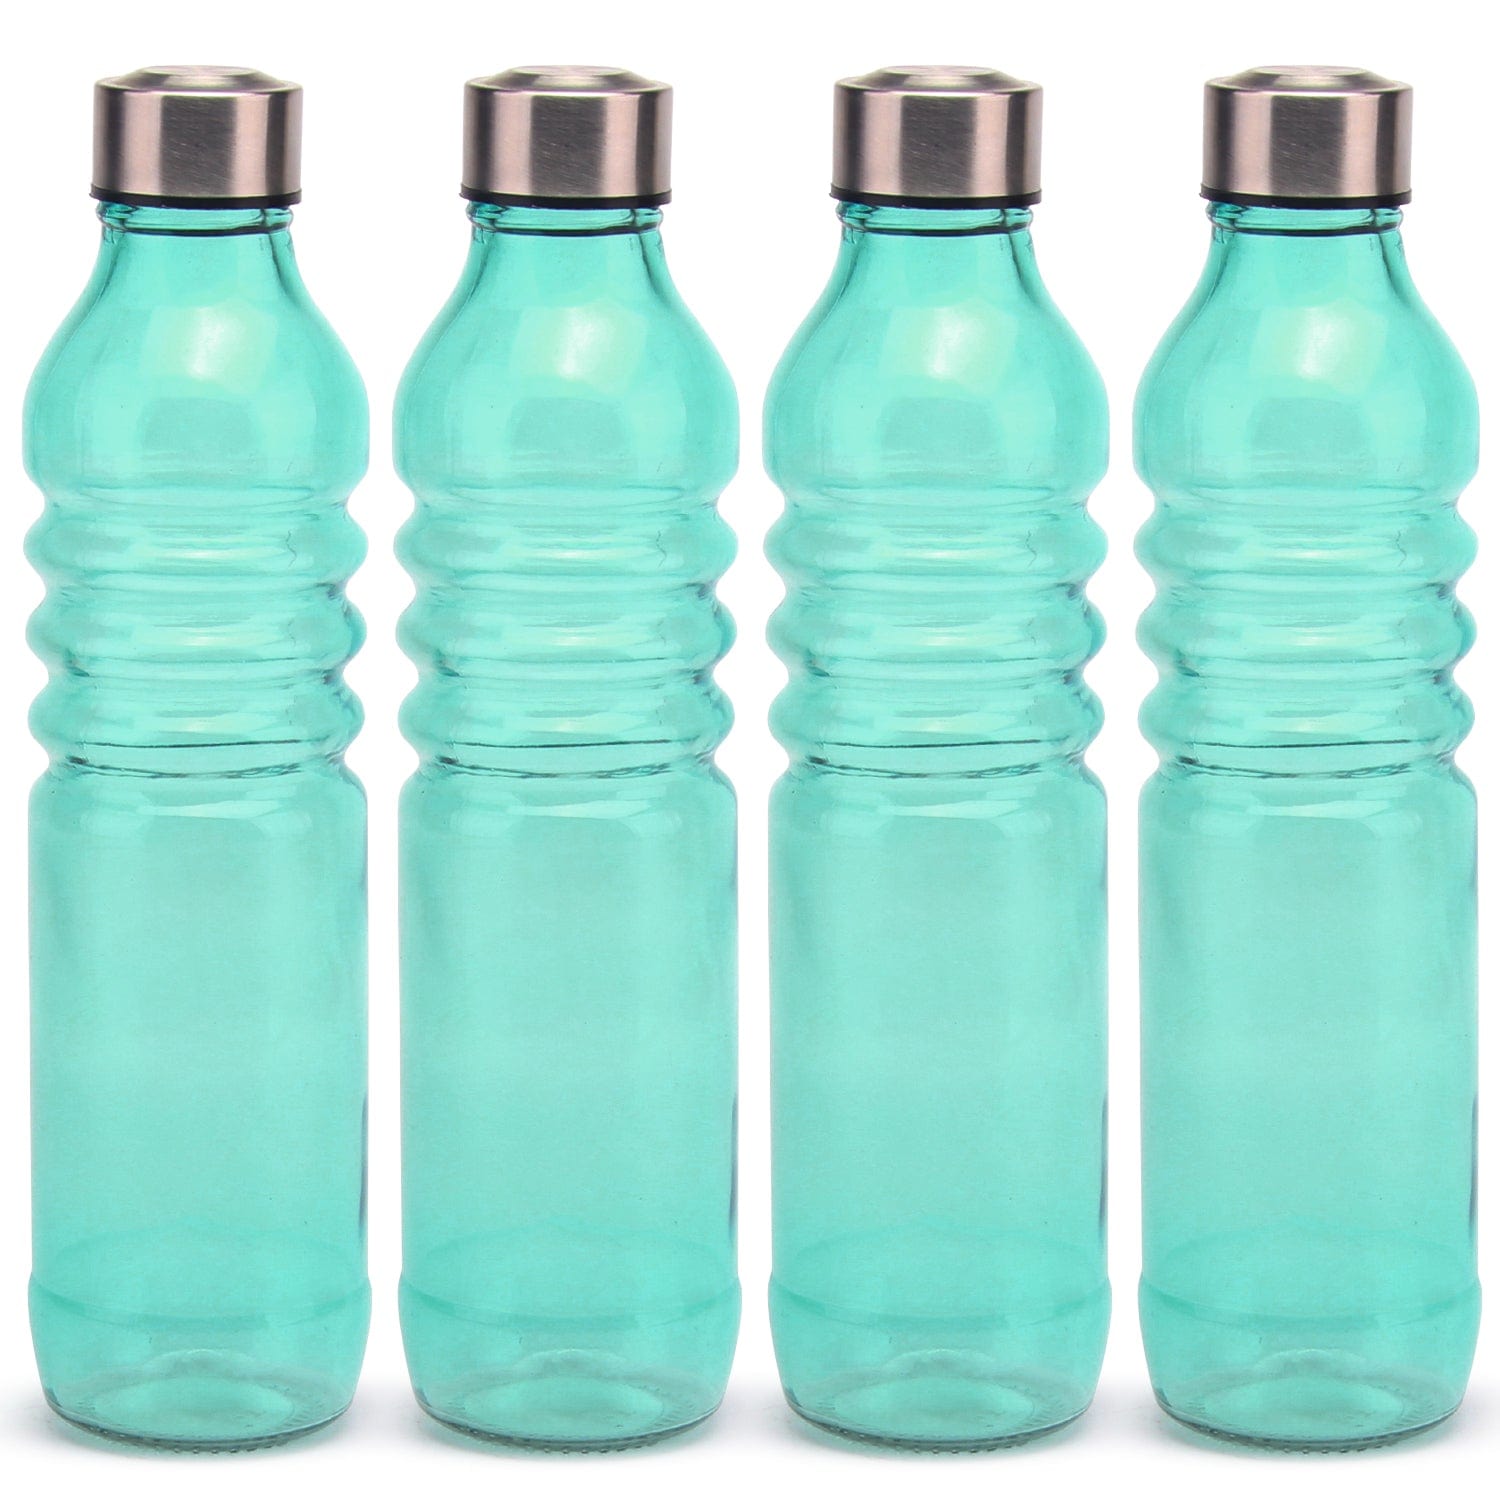 Red Butler Bottles Coloured Glass Bottle 750ml | 4pcs Set | Green QGBT75A2 Redbutler